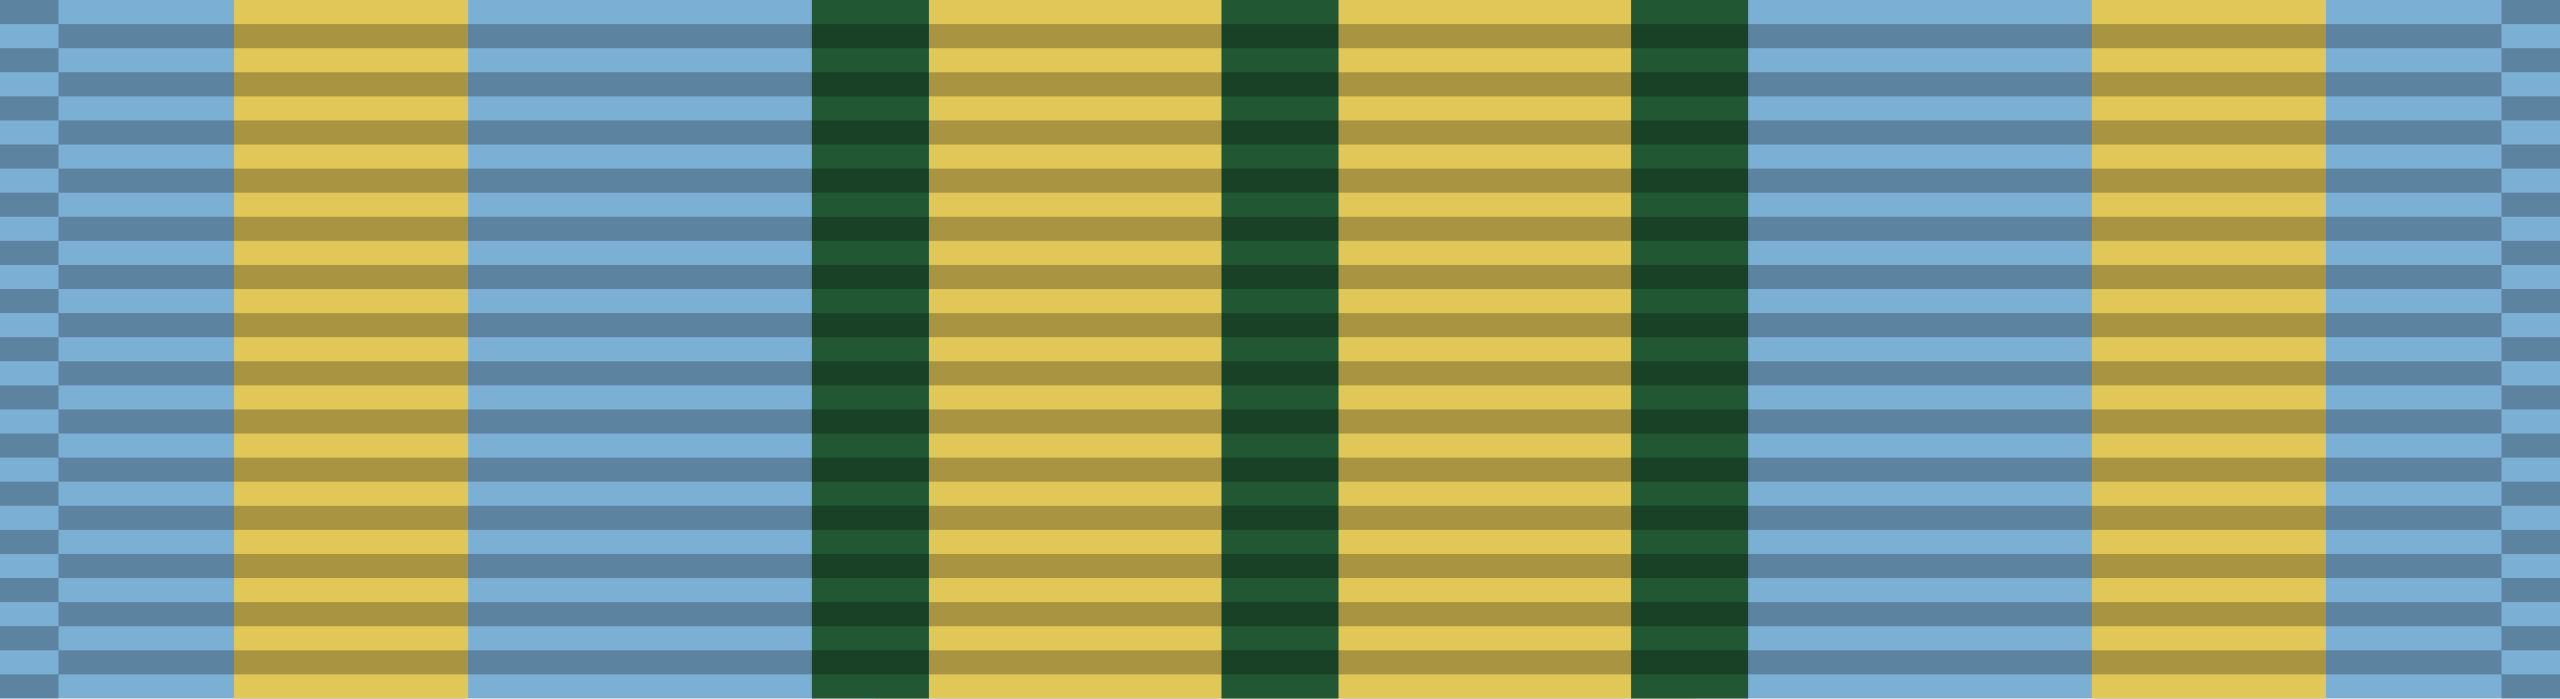 File:Award ribbon blue 1st.png - Wikimedia Commons